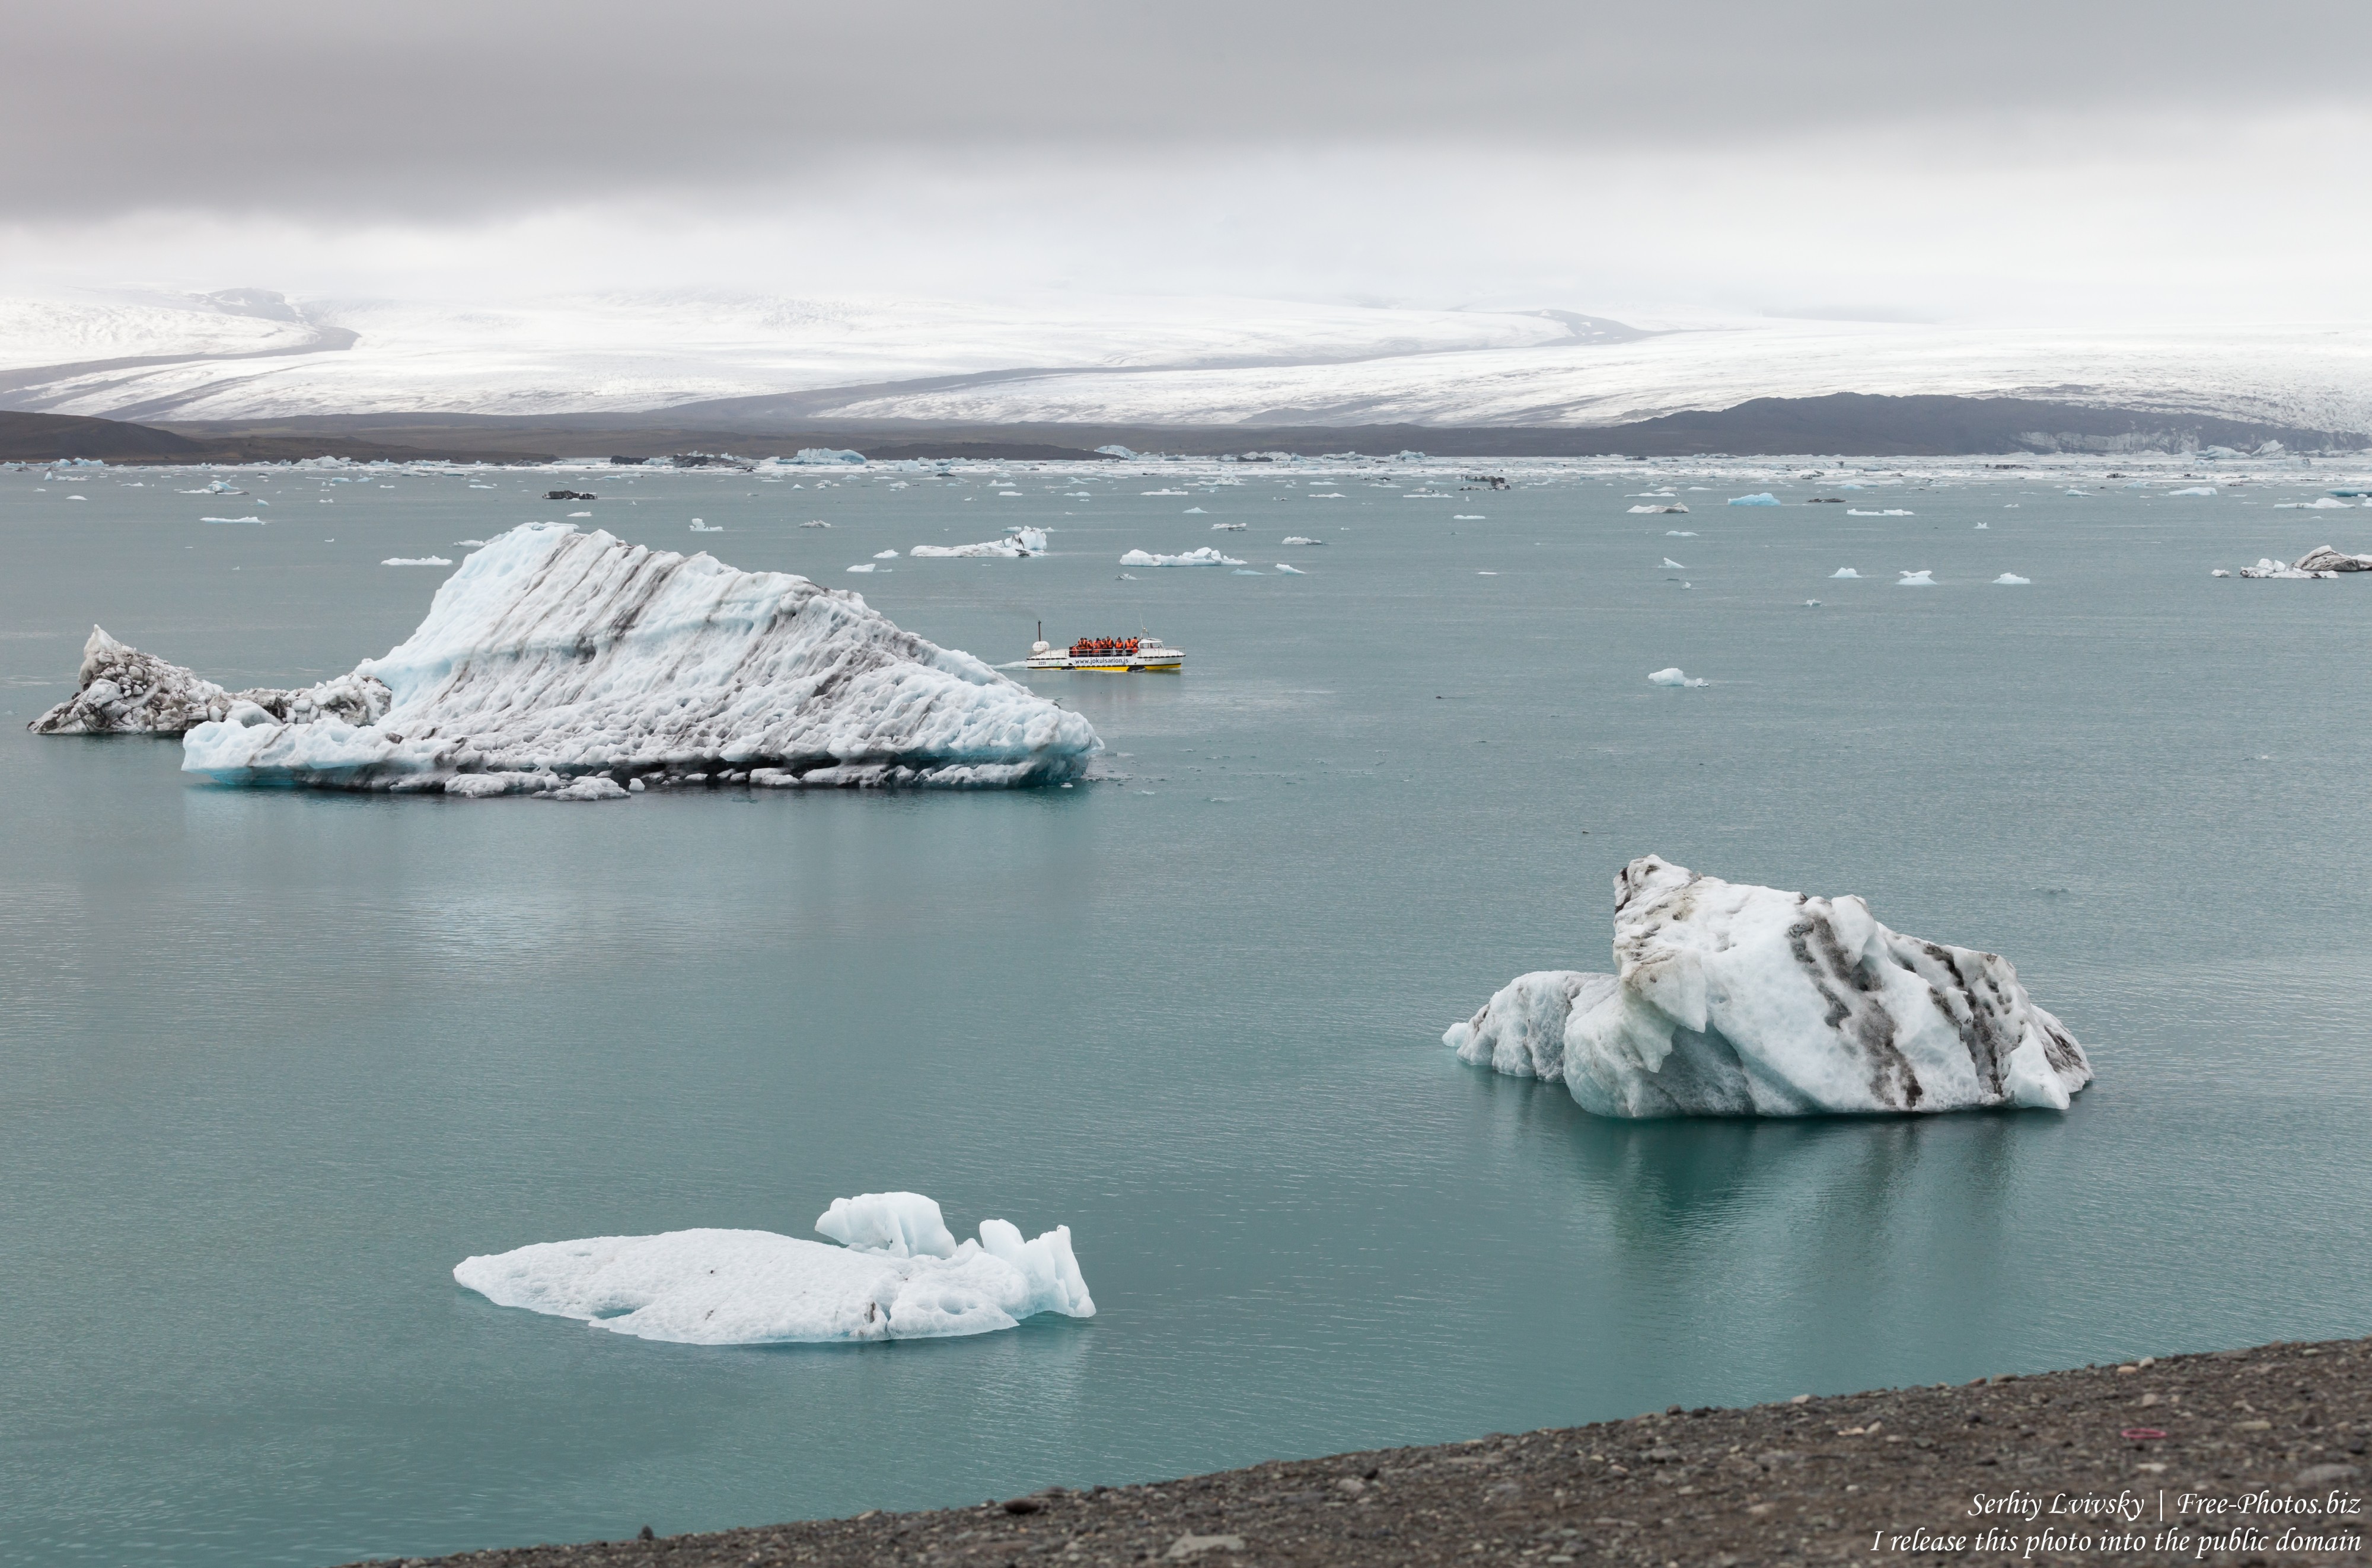 Jokulsarlon Glacier Lagoon, Iceland, photographed in May 2019 by Serhiy Lvivsky, photo 15